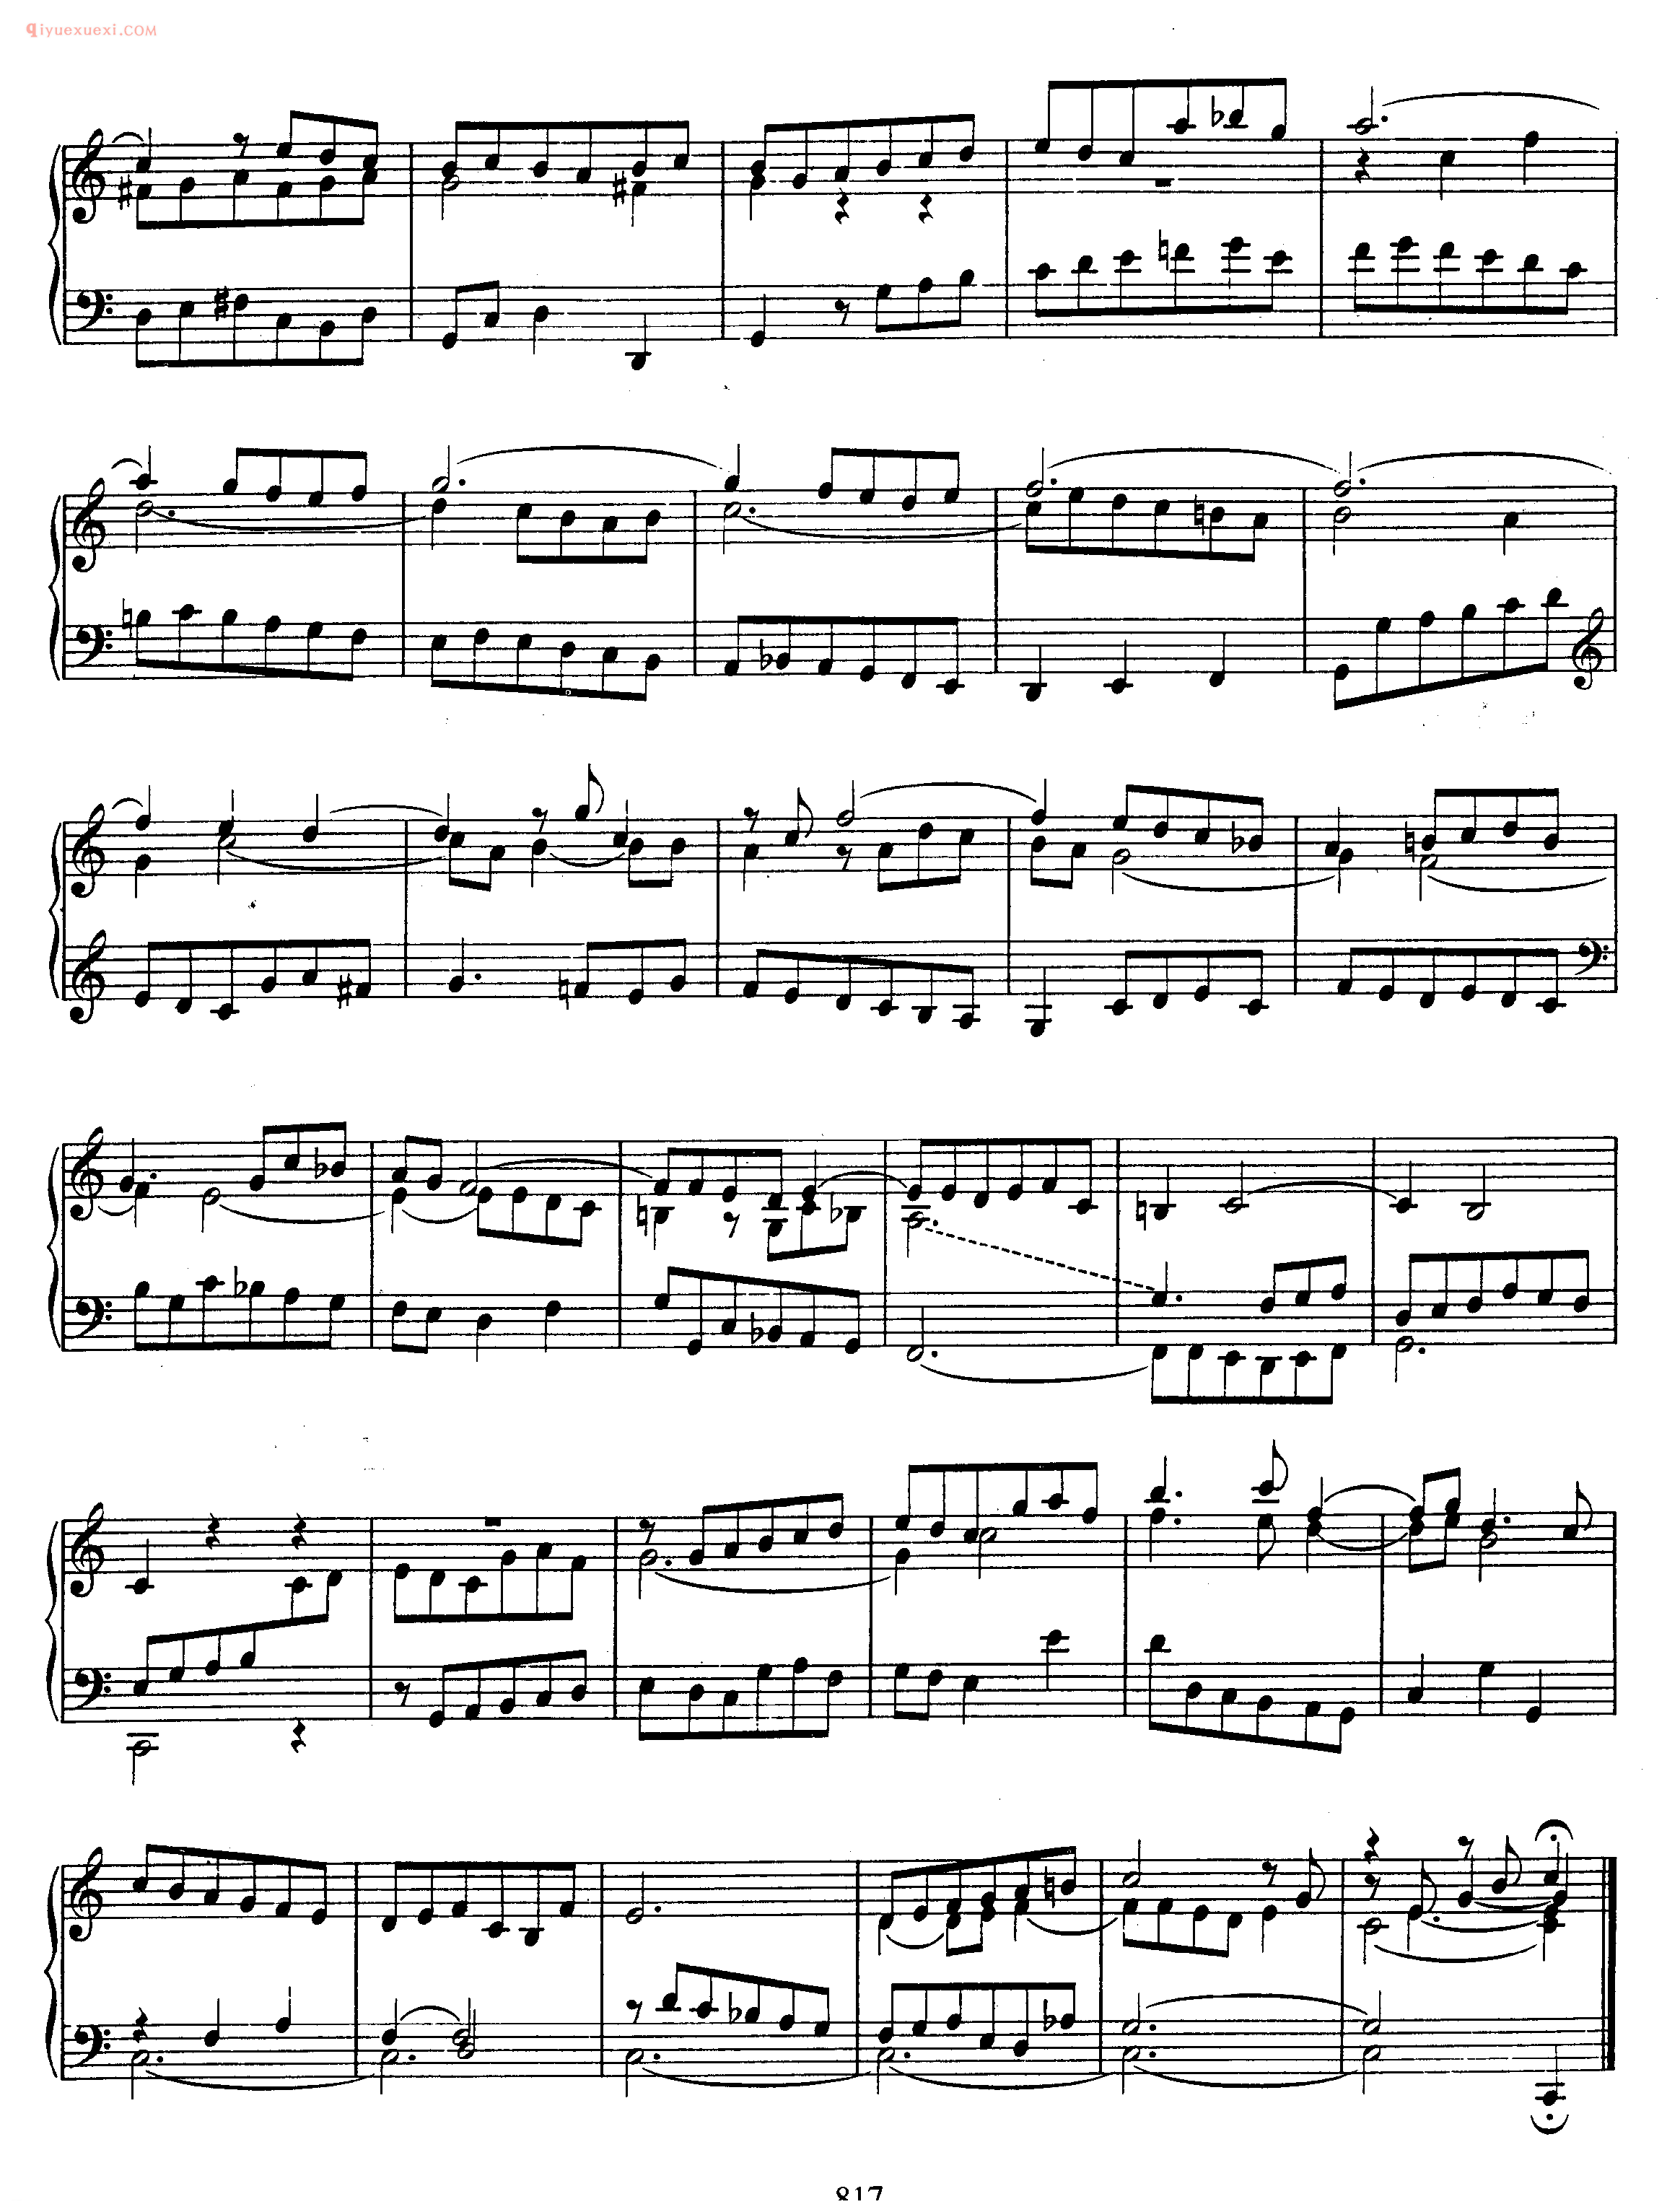 巴赫C大调前奏曲《Preludes No.5 in C Major BWV 943》巴赫钢琴乐谱